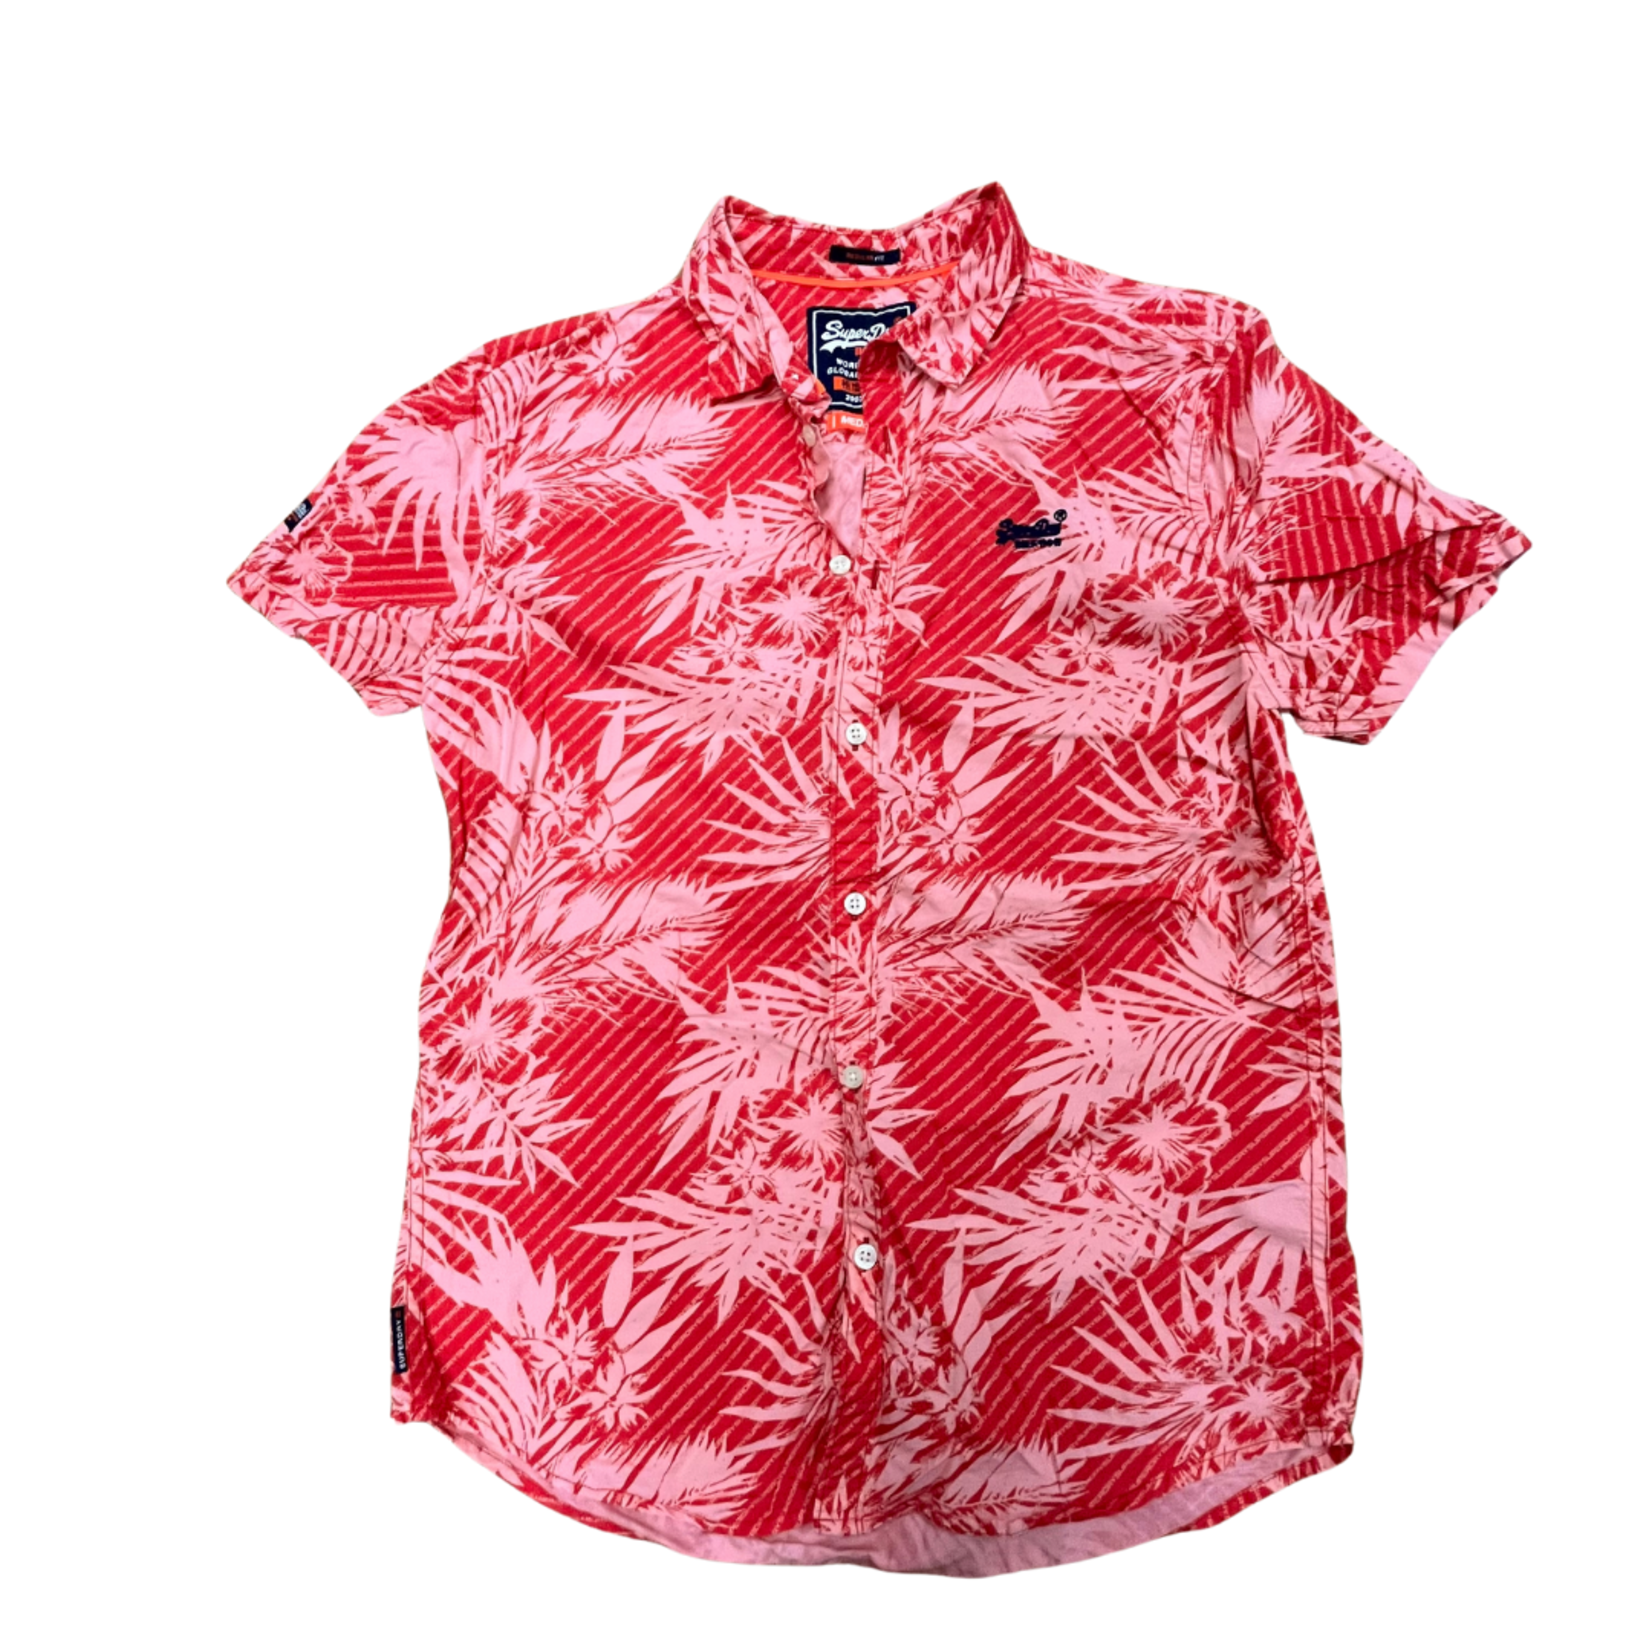 Mission Zero ReLoved Men's Aloha Shirt - Super Dry- Pink Aloha Print - Medium